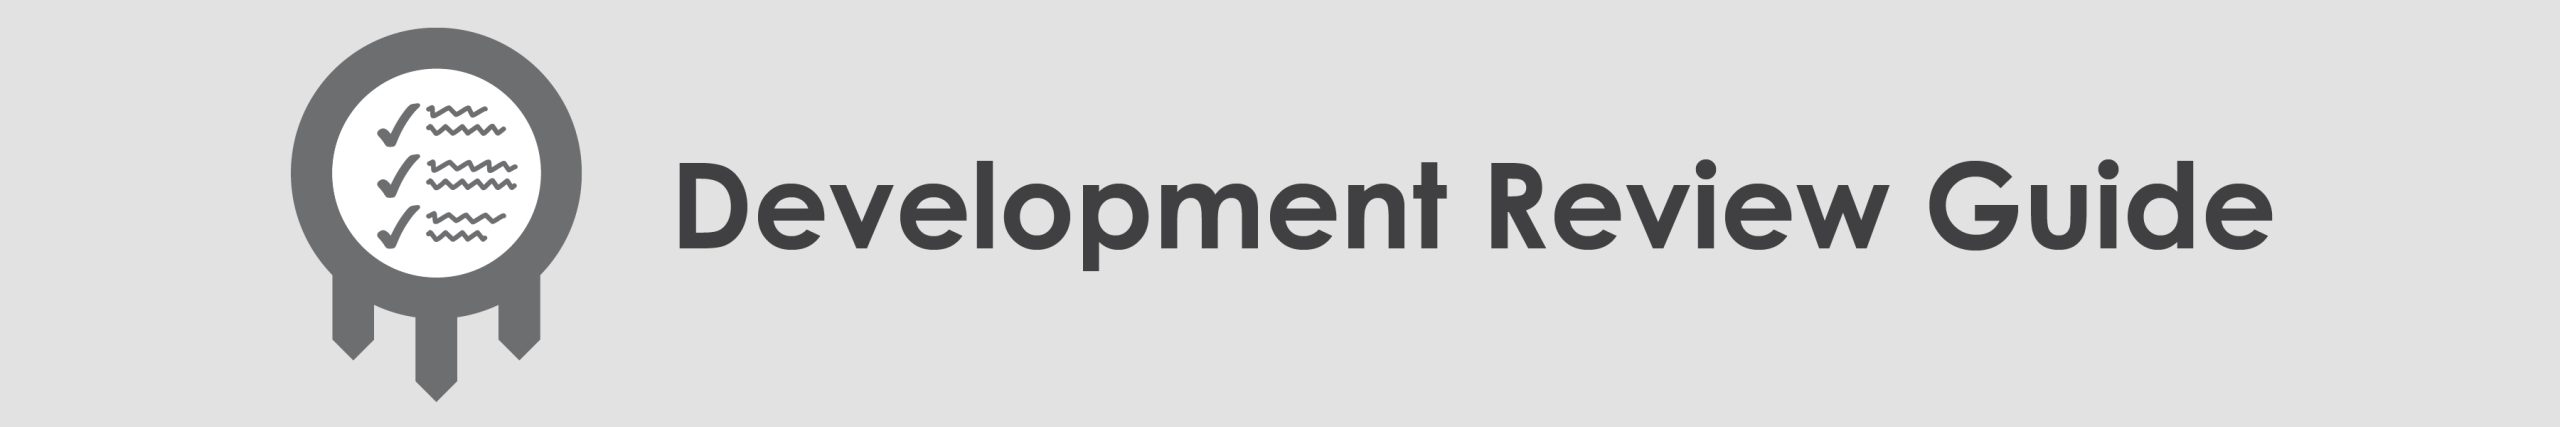 Development Review Guide